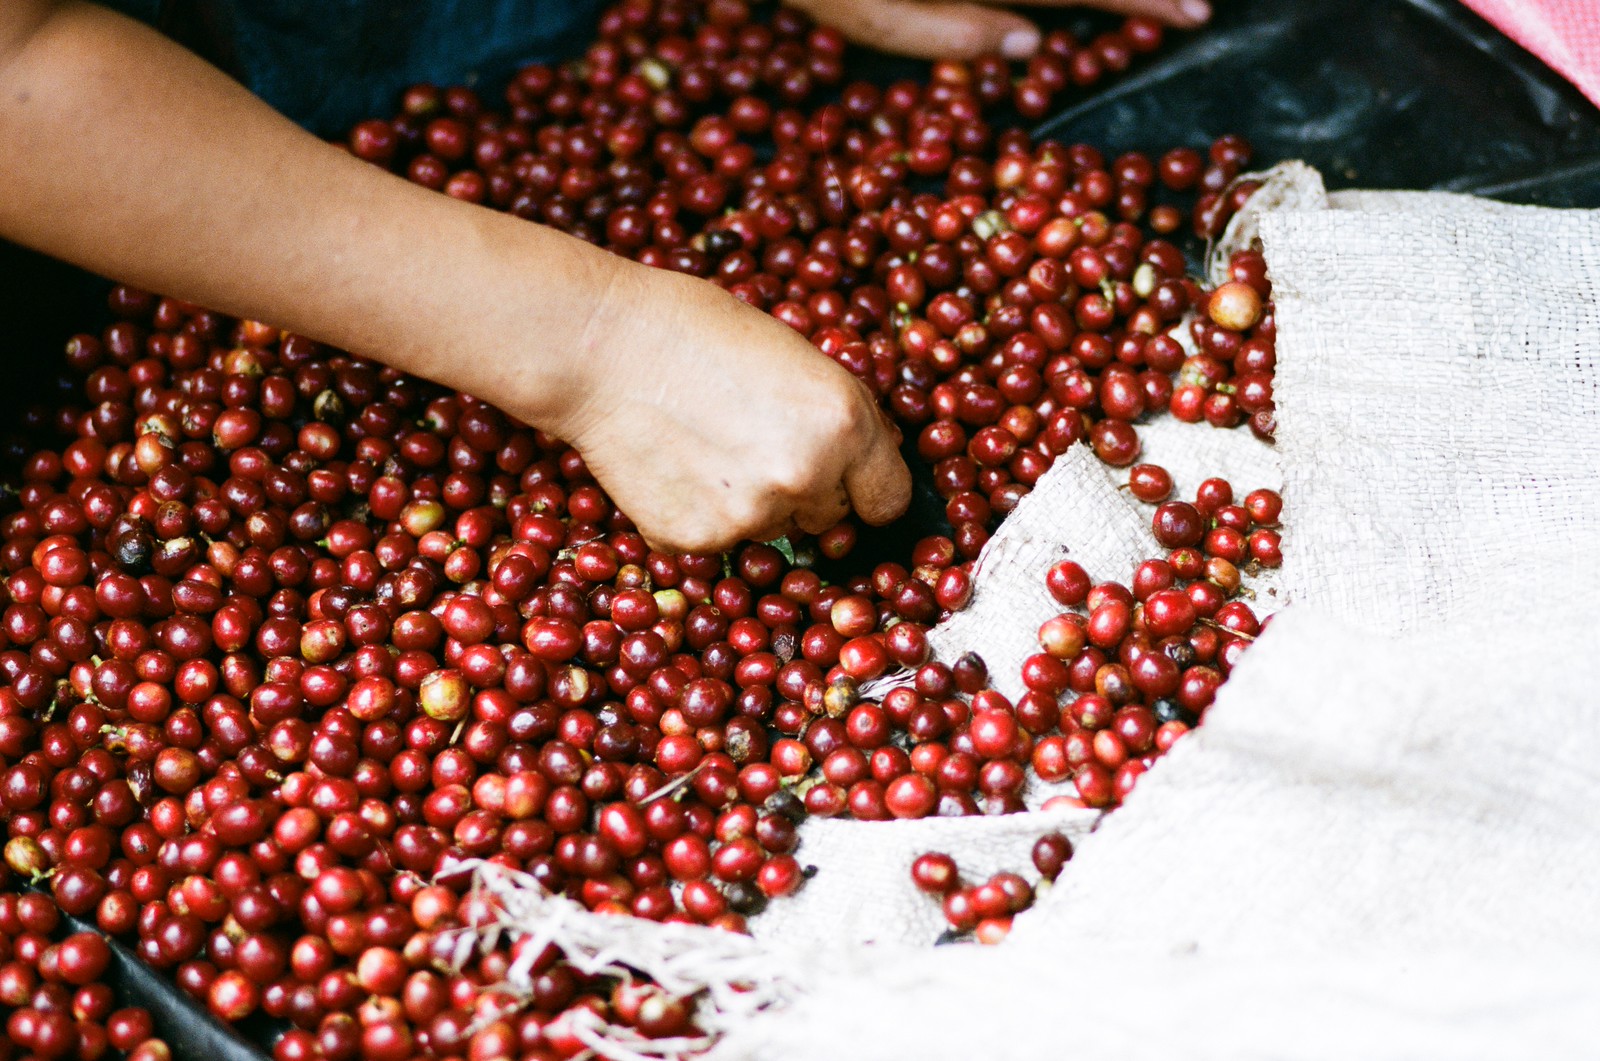 Uganda says coffee exports down 14% yr/yr due to drought